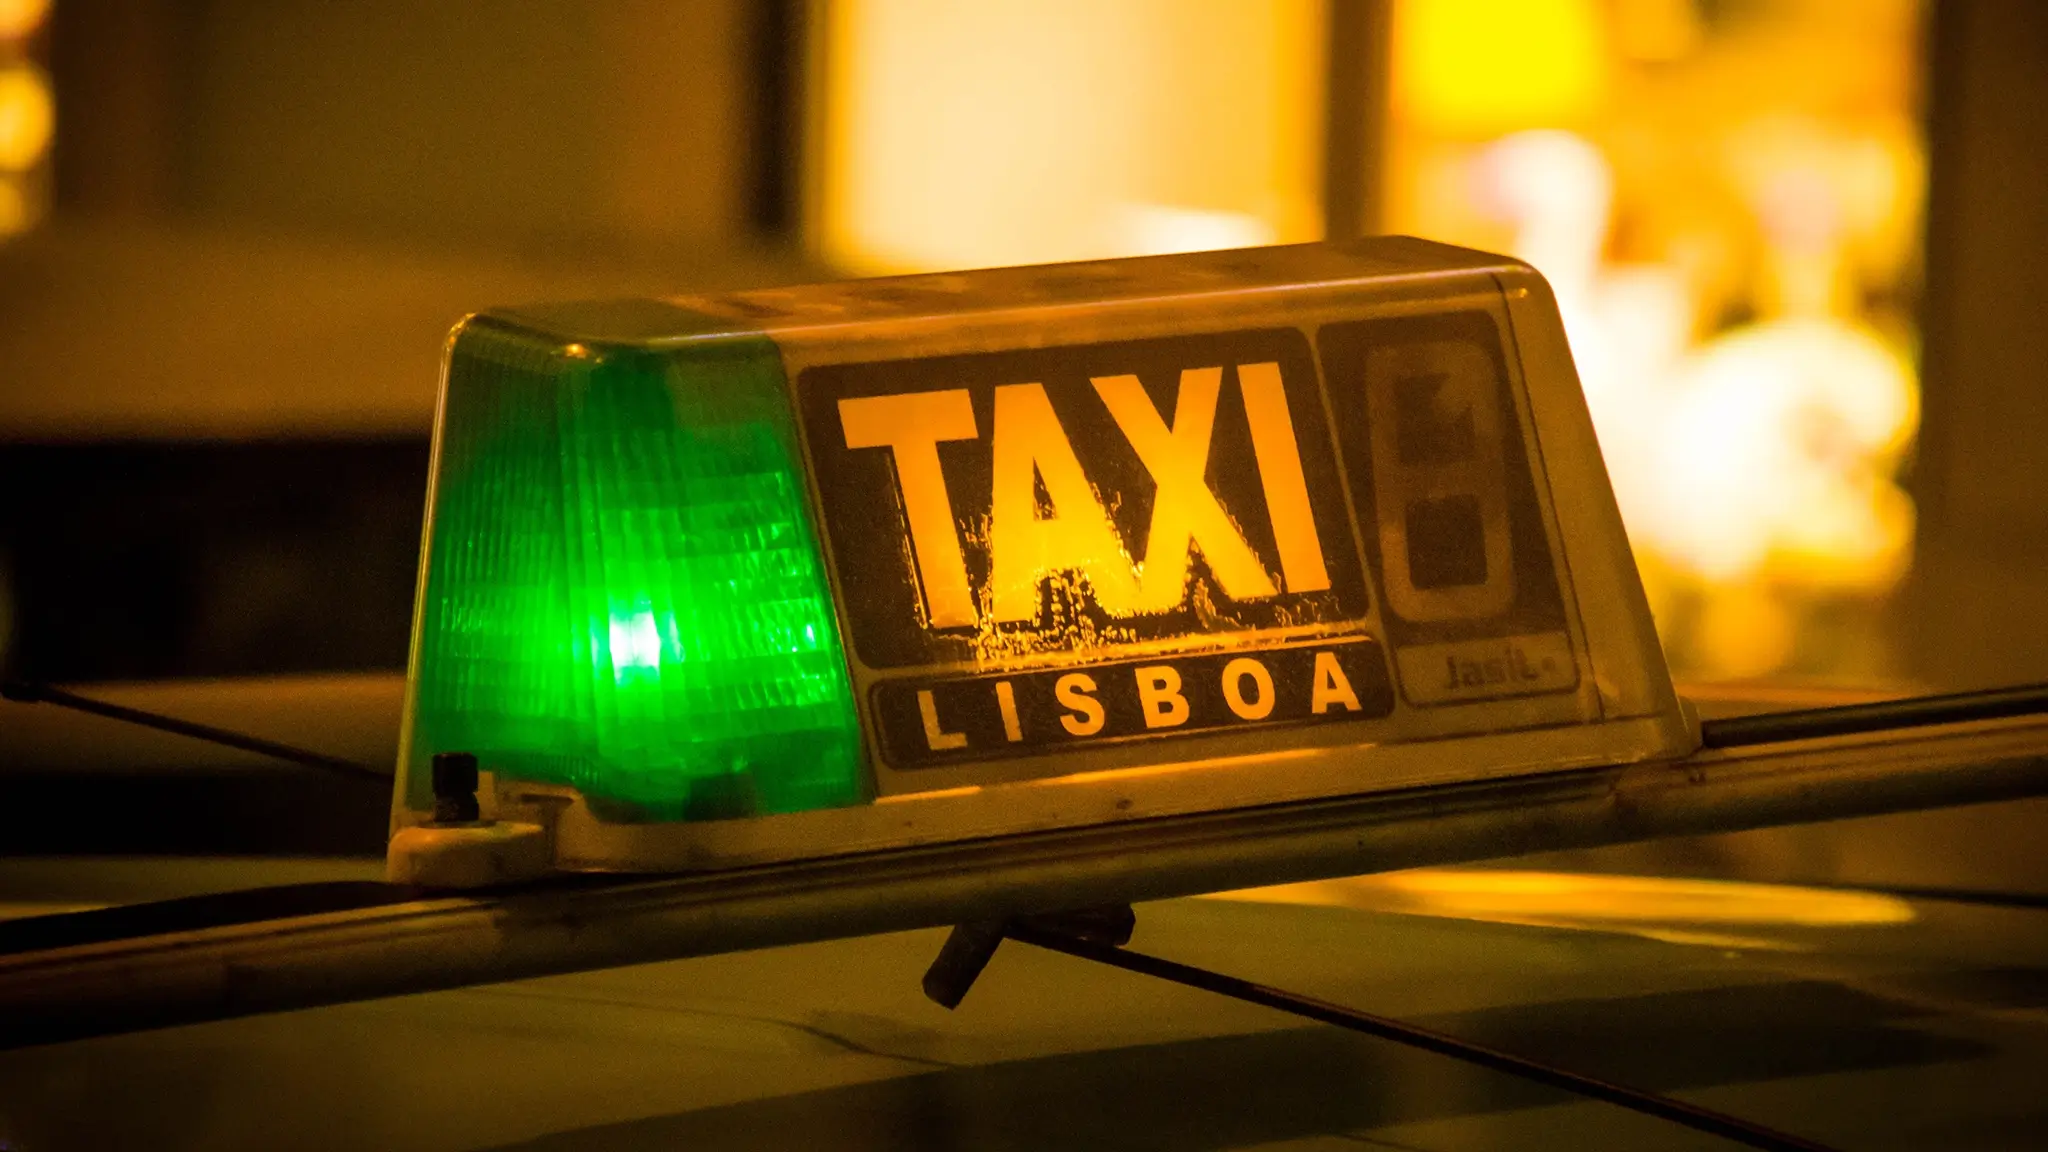 Táxis e TVDE disputam lugares nos aeroportos. Concorrência recomenda igualdade